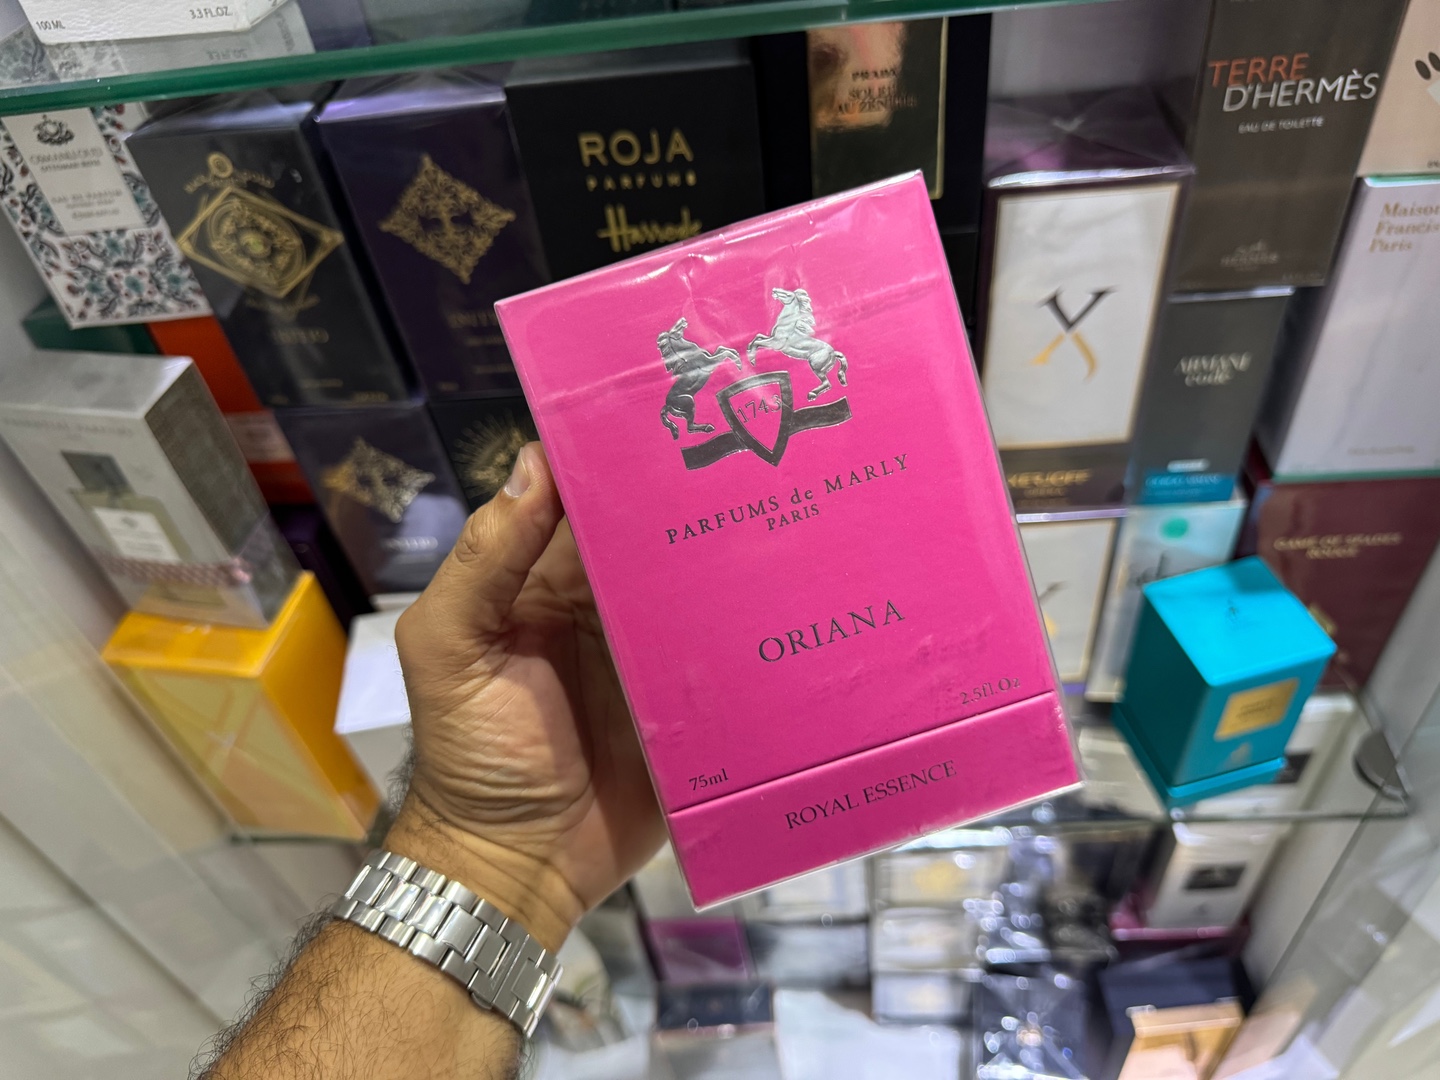 joyas, relojes y accesorios - Perfume Parfums de Marly ORIANA Royal Essence 75ml Nuevo, Original $ 15,500 NEG